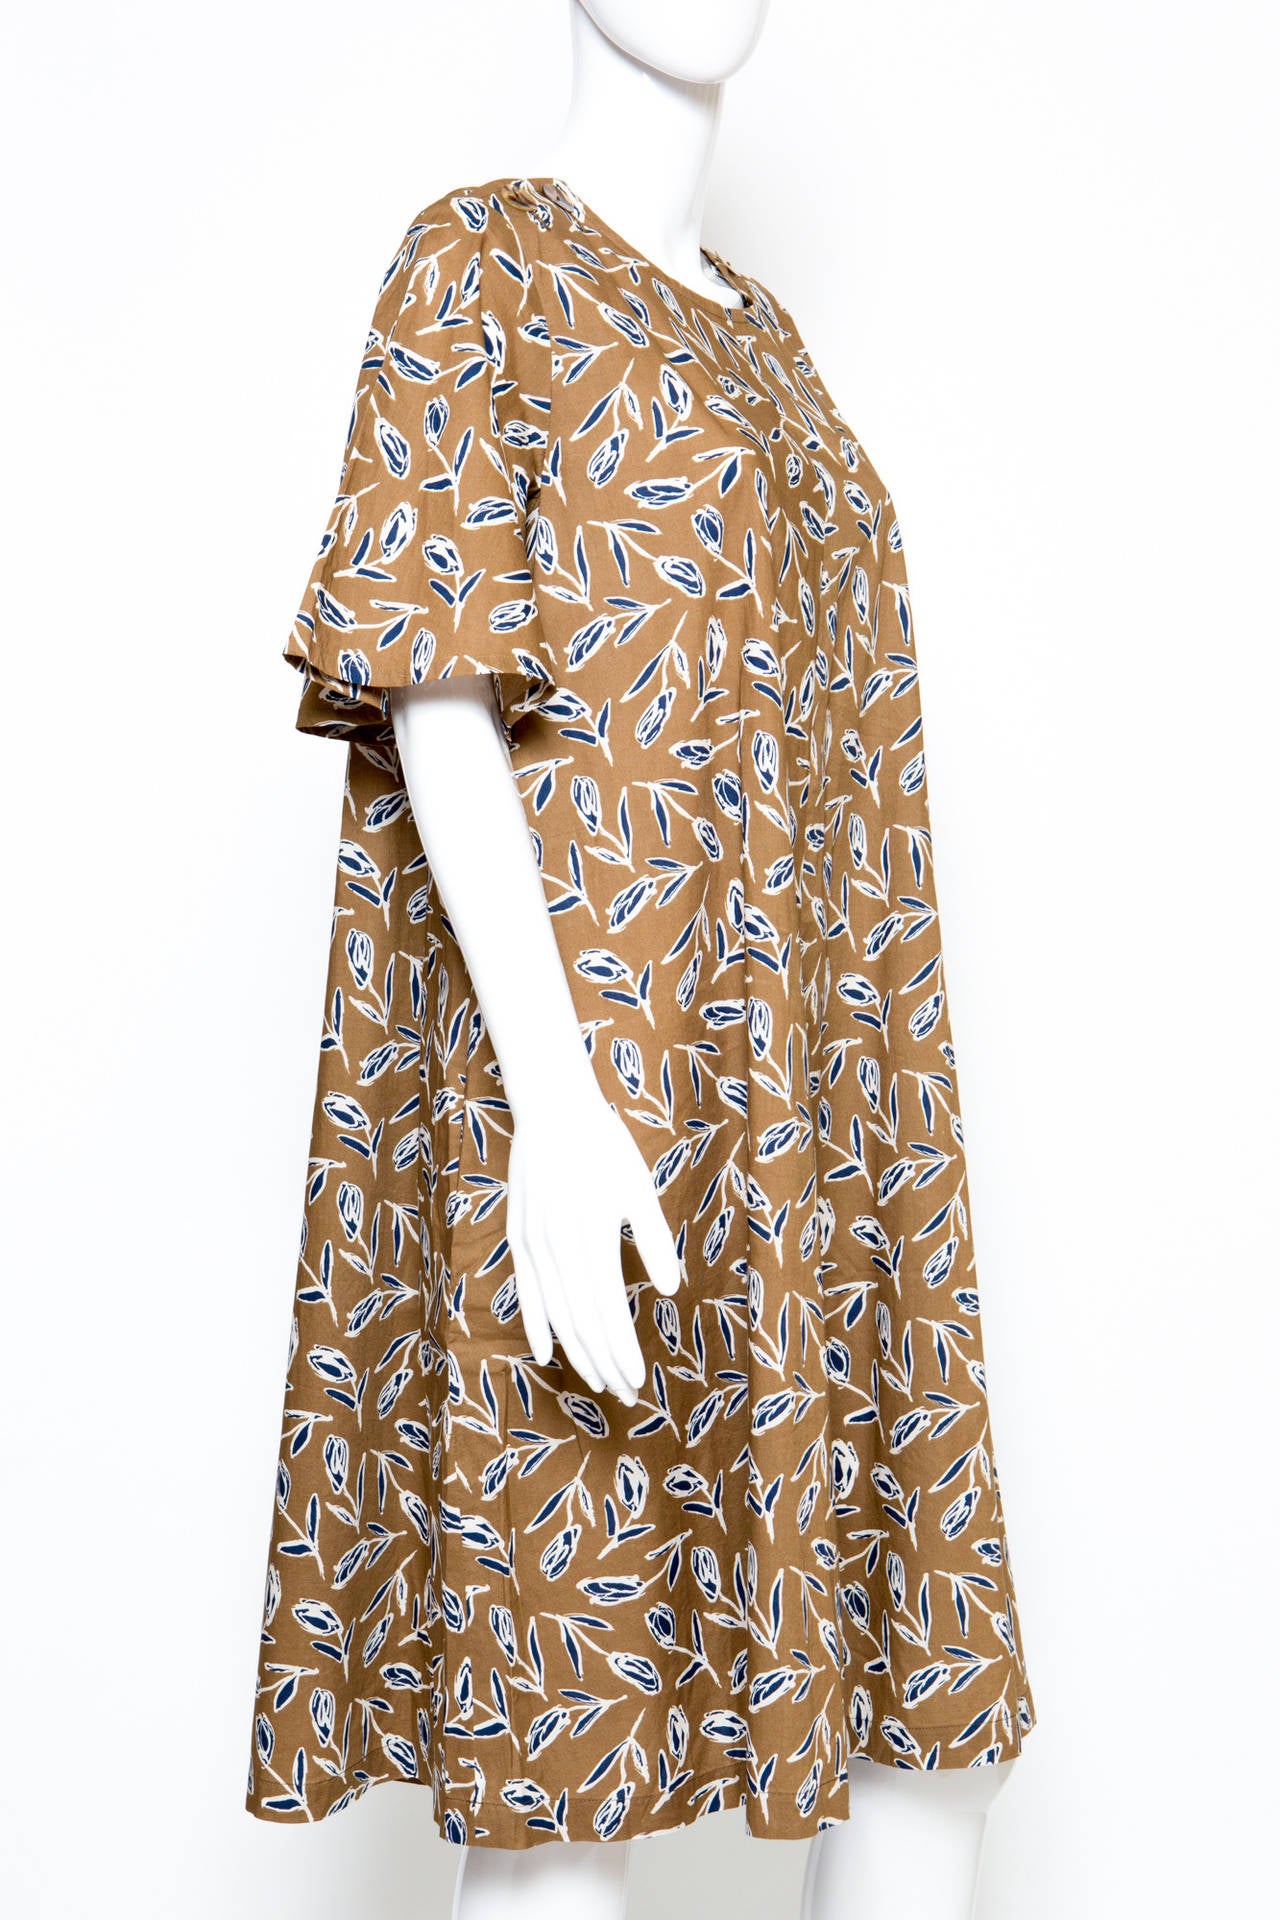 Women's 1980s Yves Saint-Laurent Printed Tulip Dress